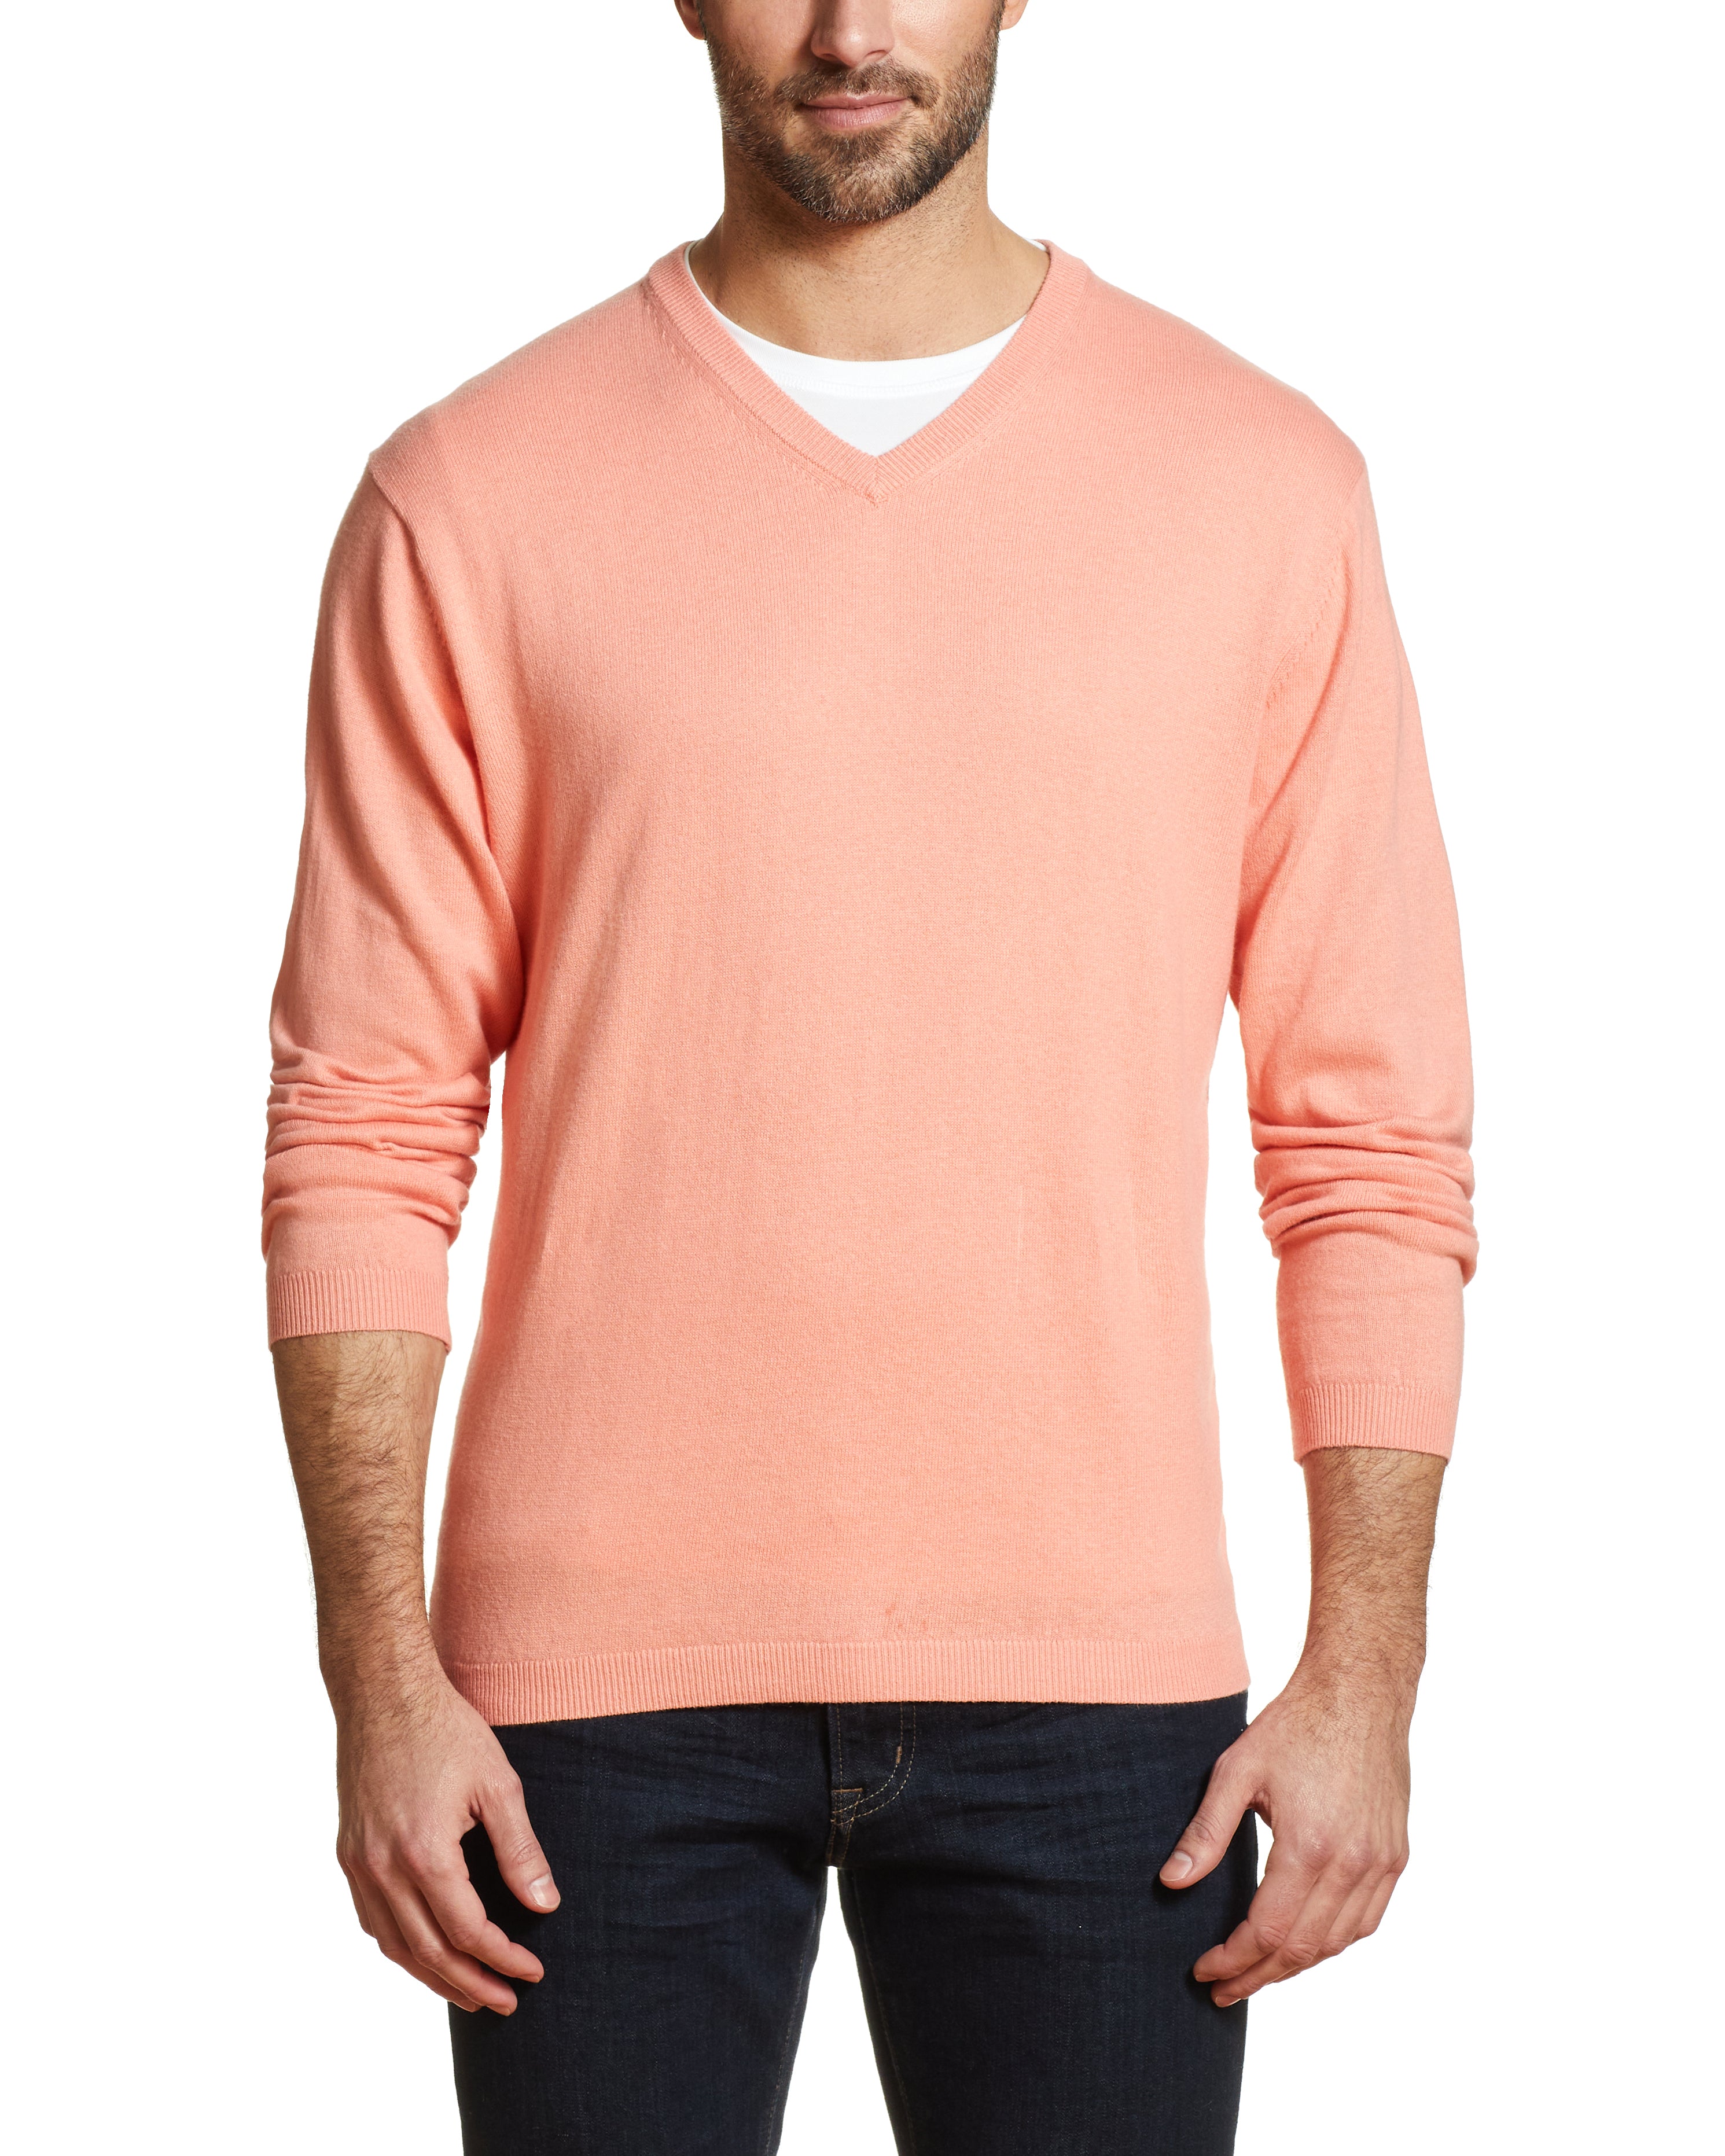 Cotton Cashmere V Neck Sweater in Coral